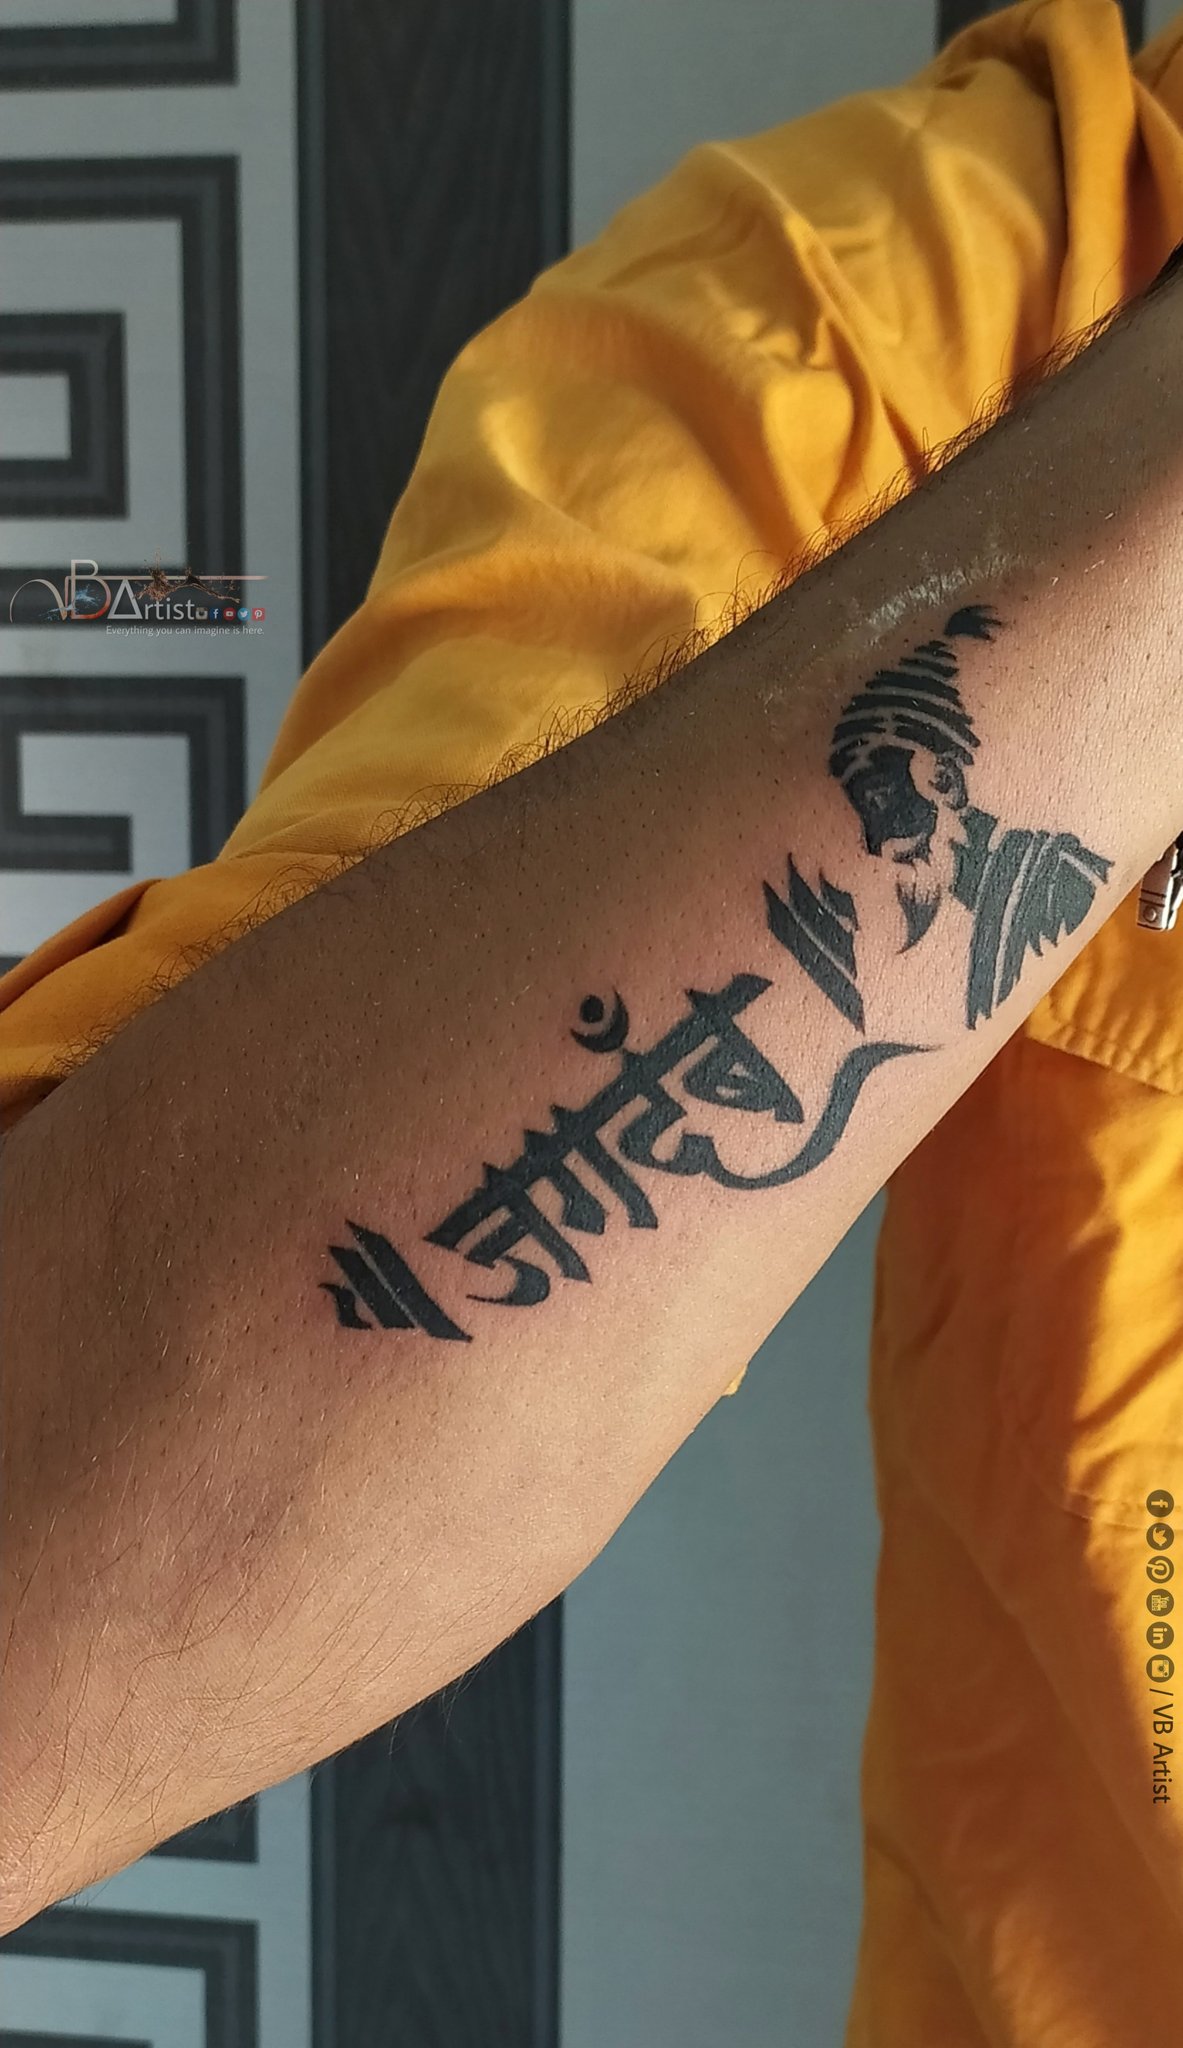 Best hindi tattoo ideas design - Rajput Proud